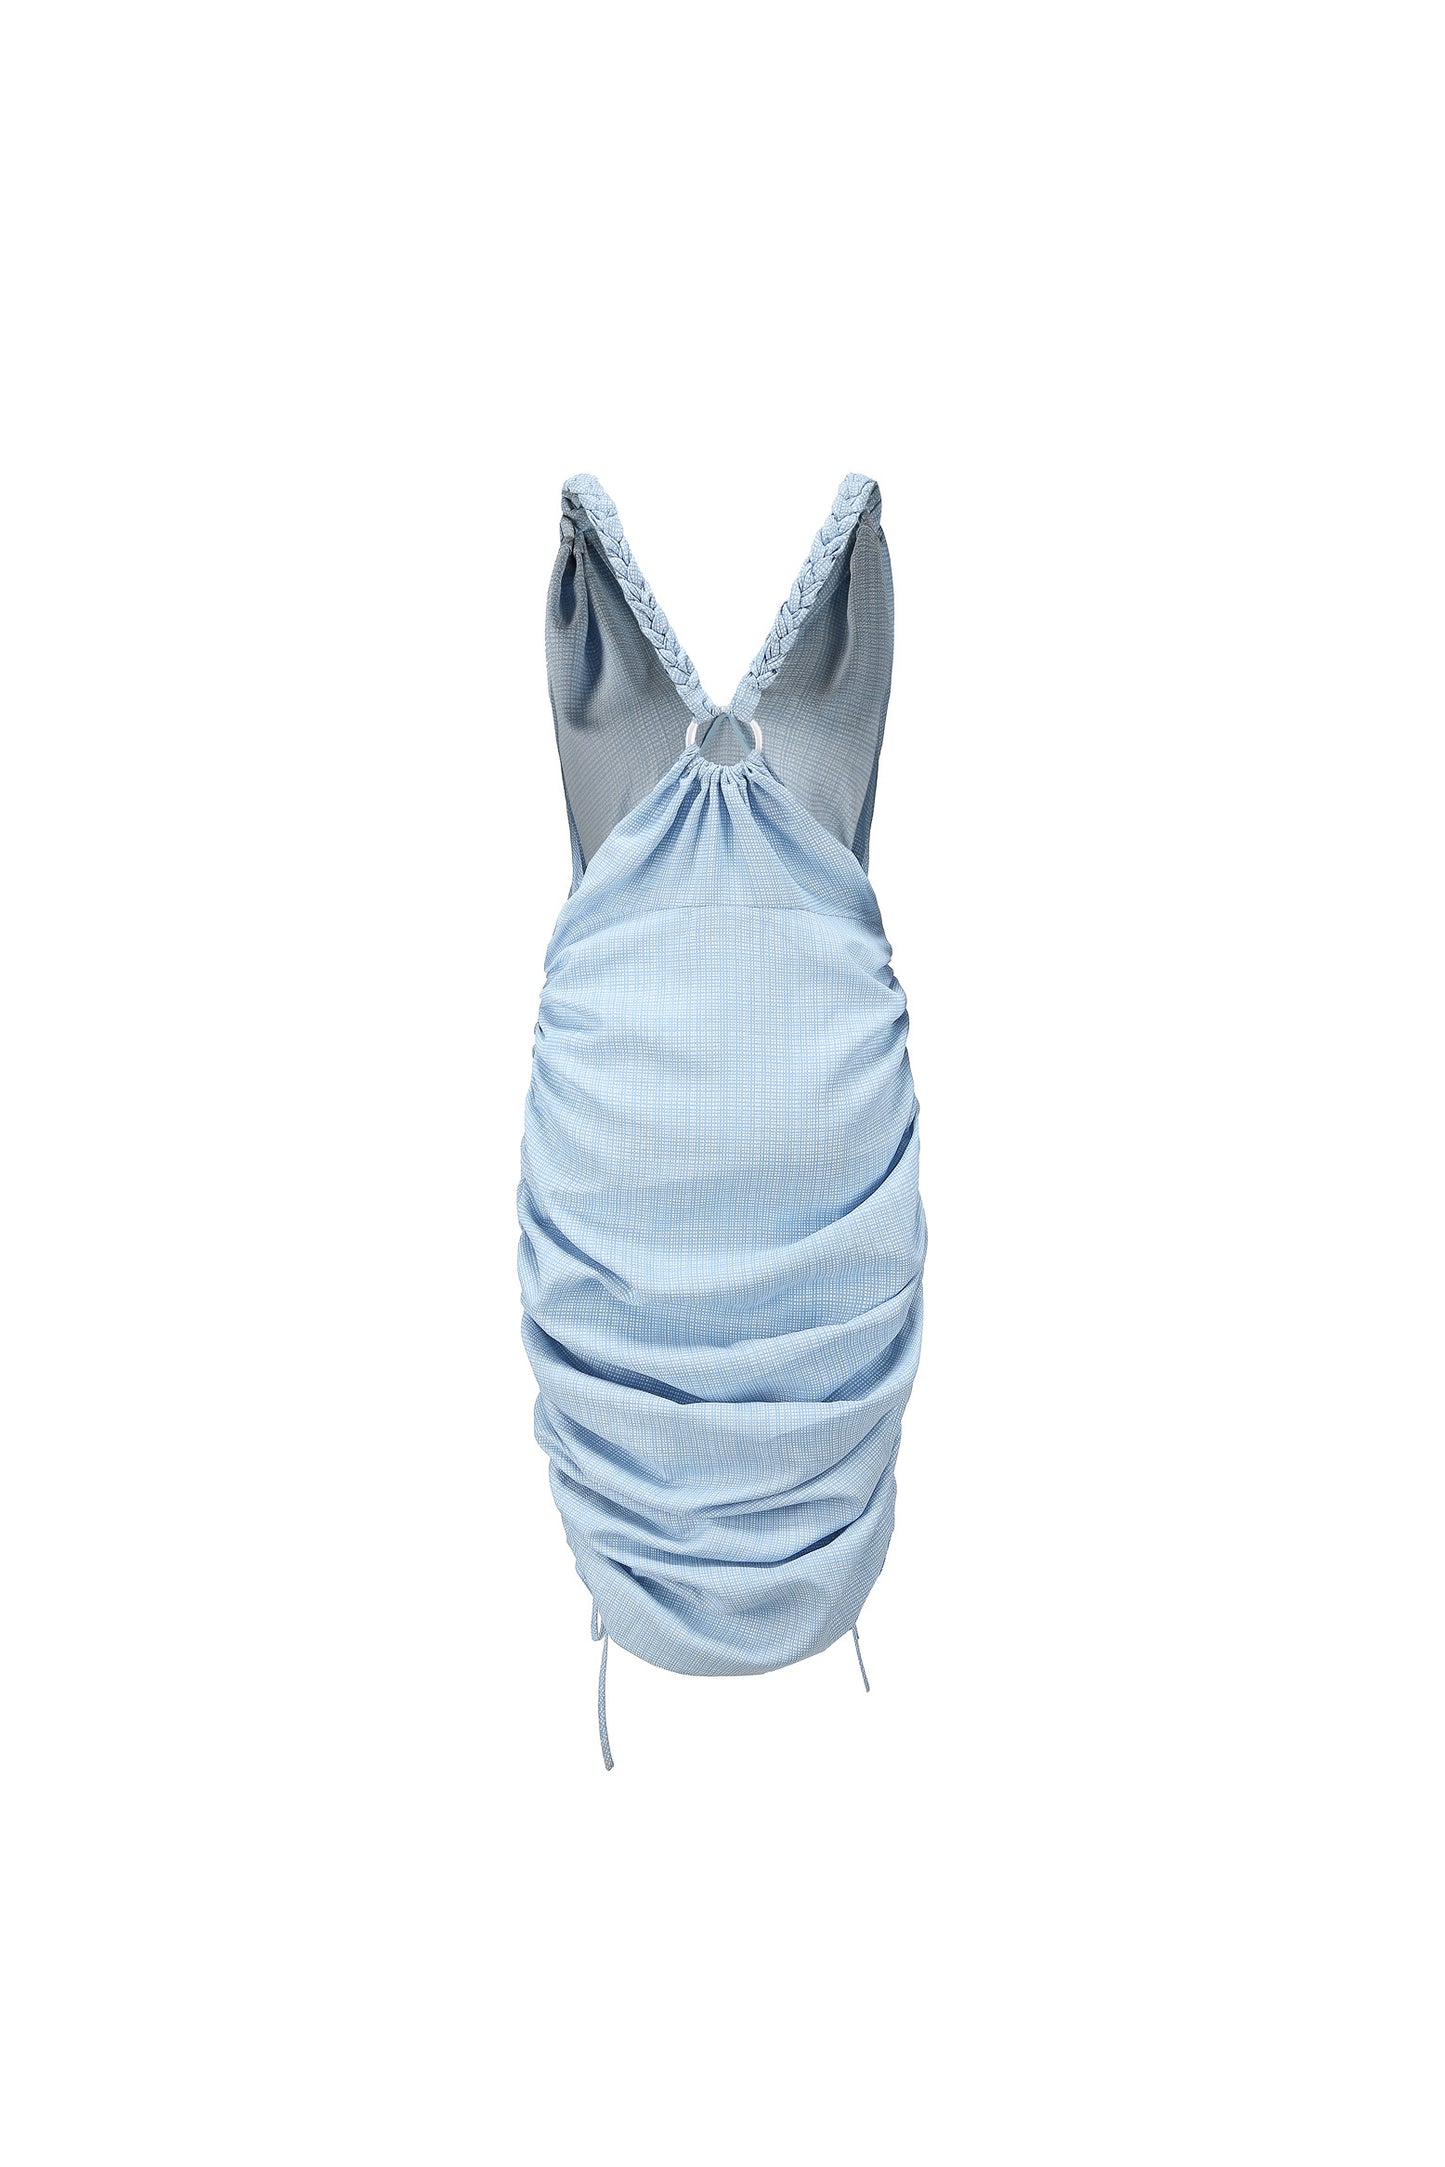 Bianca Braided Strap dress in Blue grid